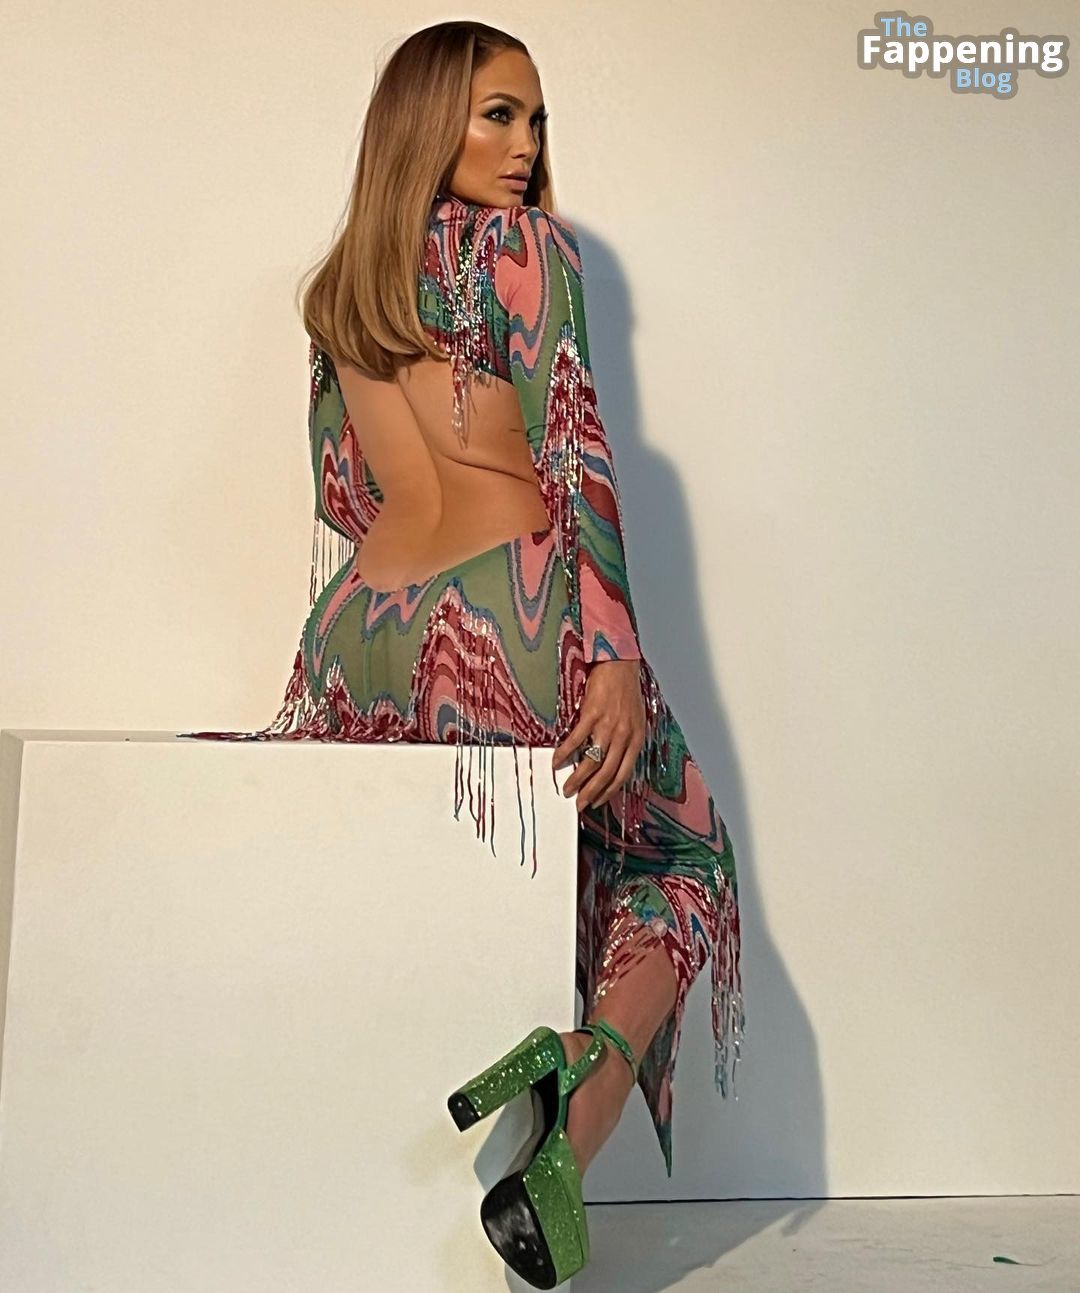 Jennifer-Lopez-Sexy-The-Fappening-Blog-6-2.jpg